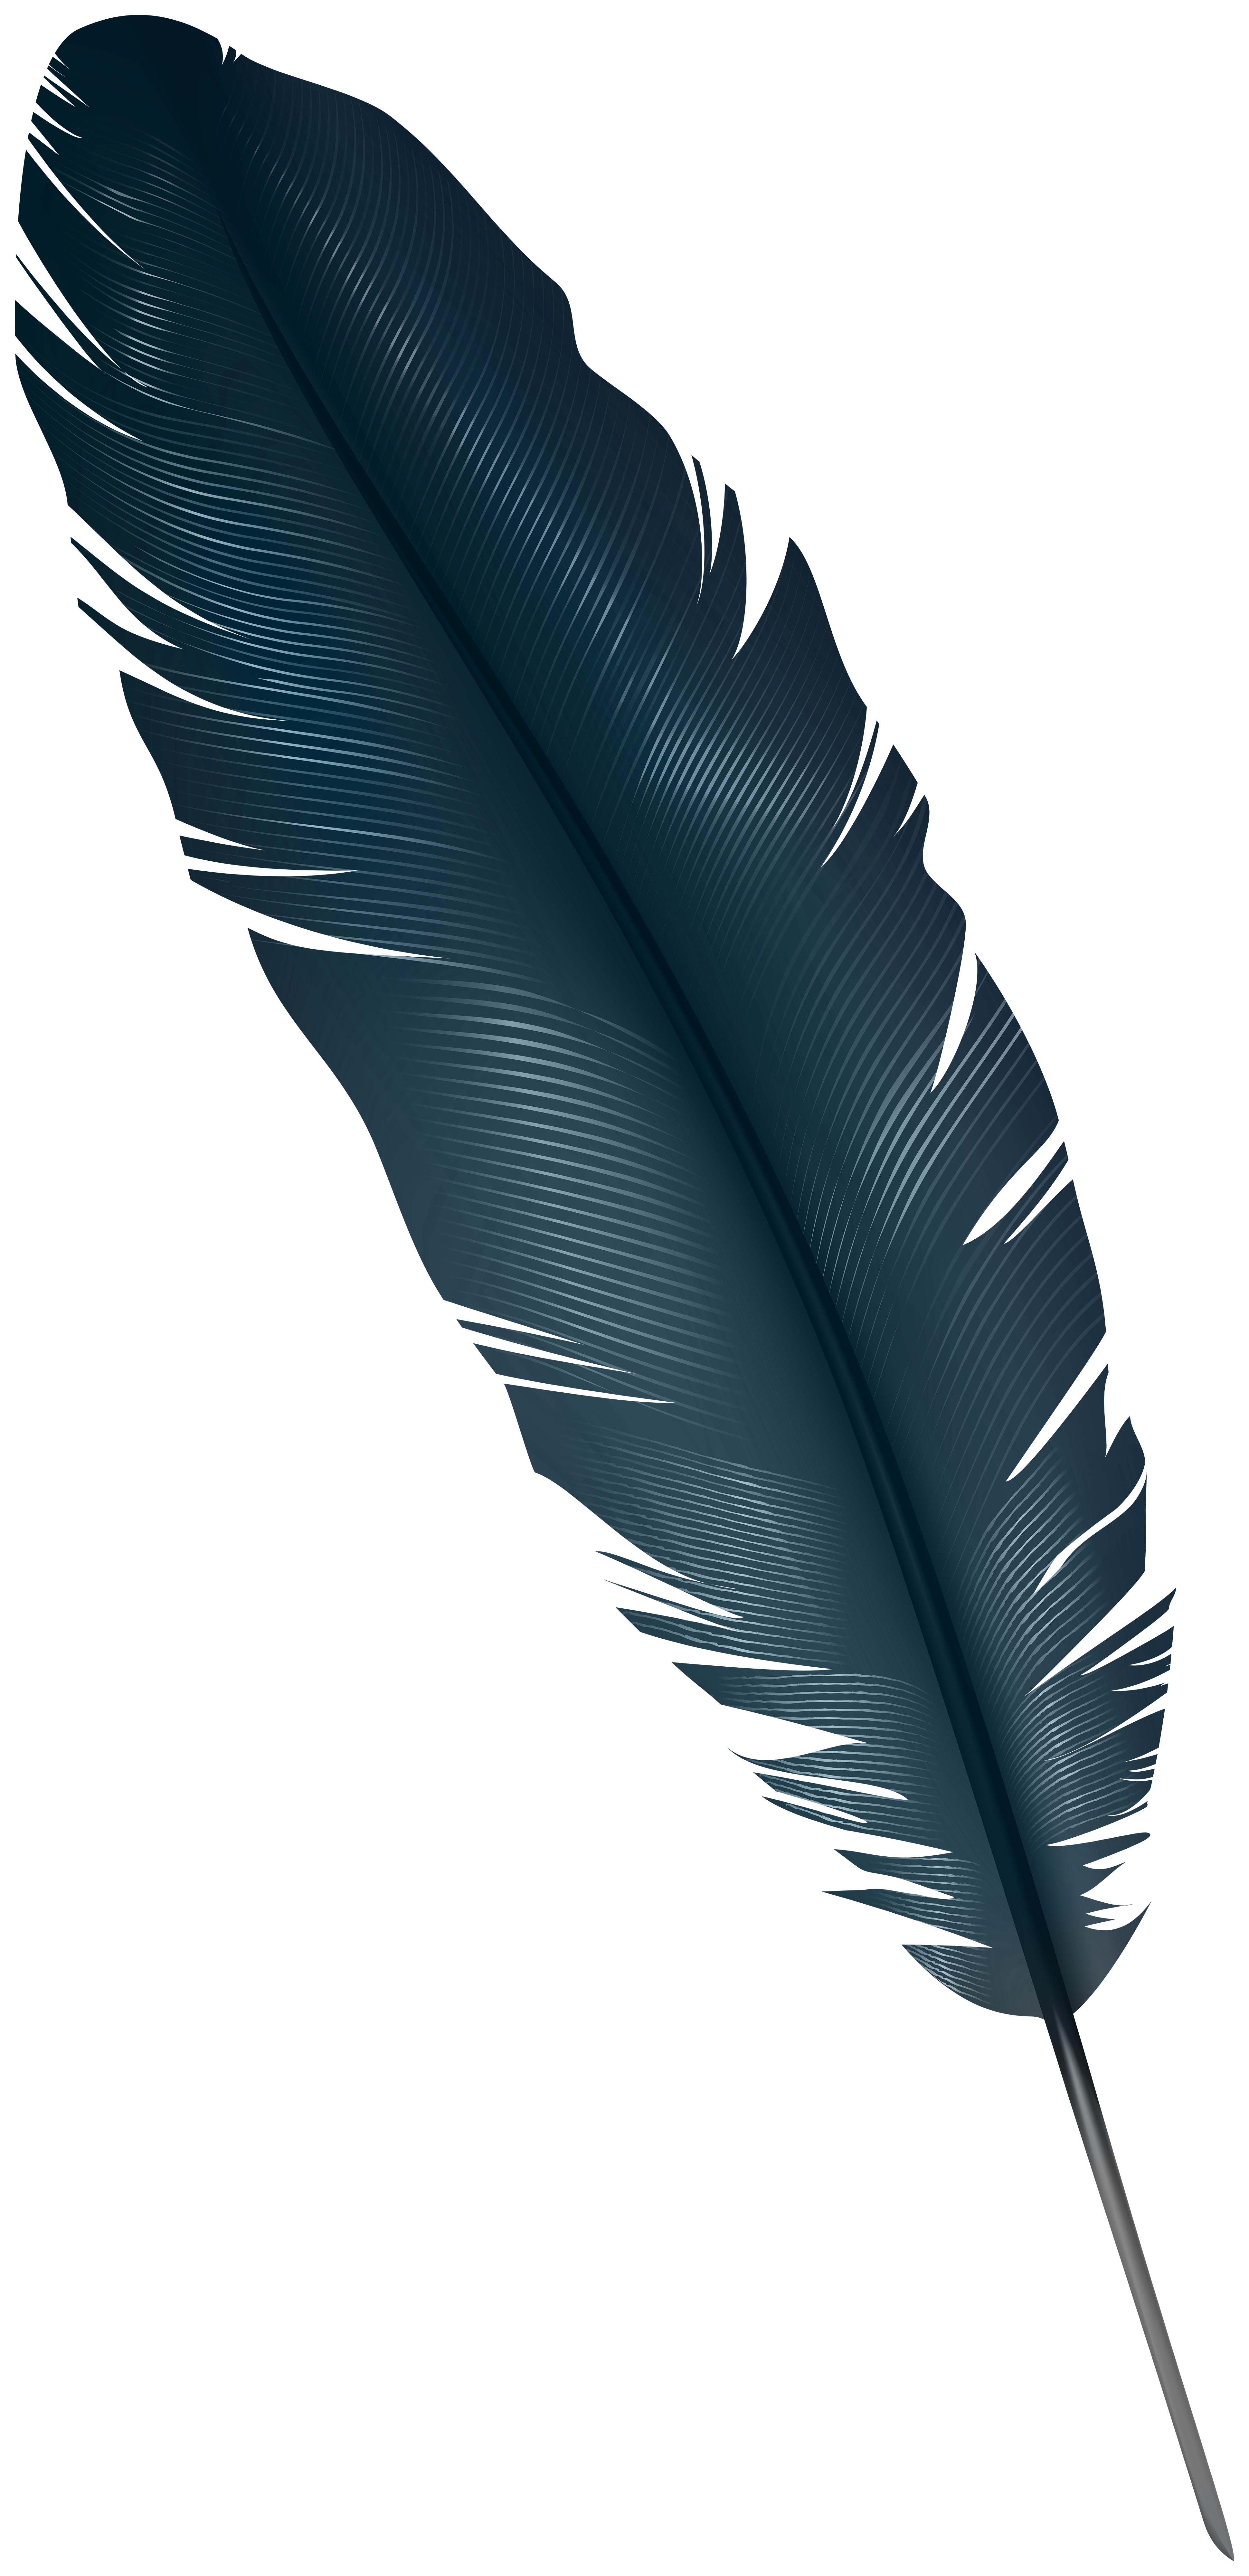 Dark Blue Feathers Background - Stock Photos